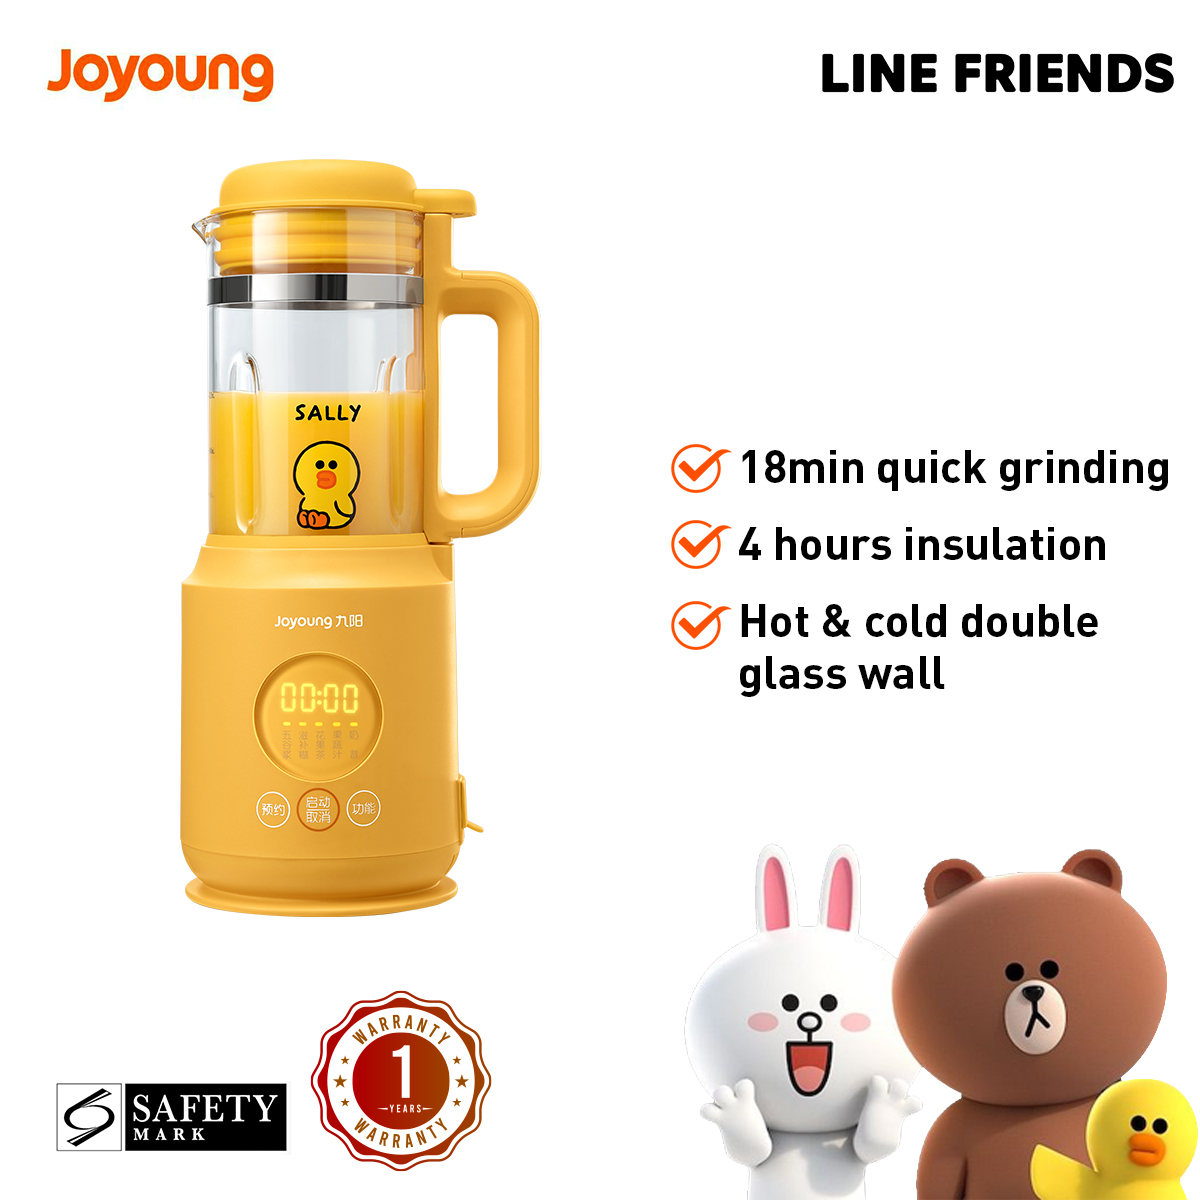 Joyoung Line Friends Sally High Speed Food Processor 420 mL / Wall-Breaking Cooking Blender /Safety Mark /1 Year Warranty JT-SJOYOP102SA